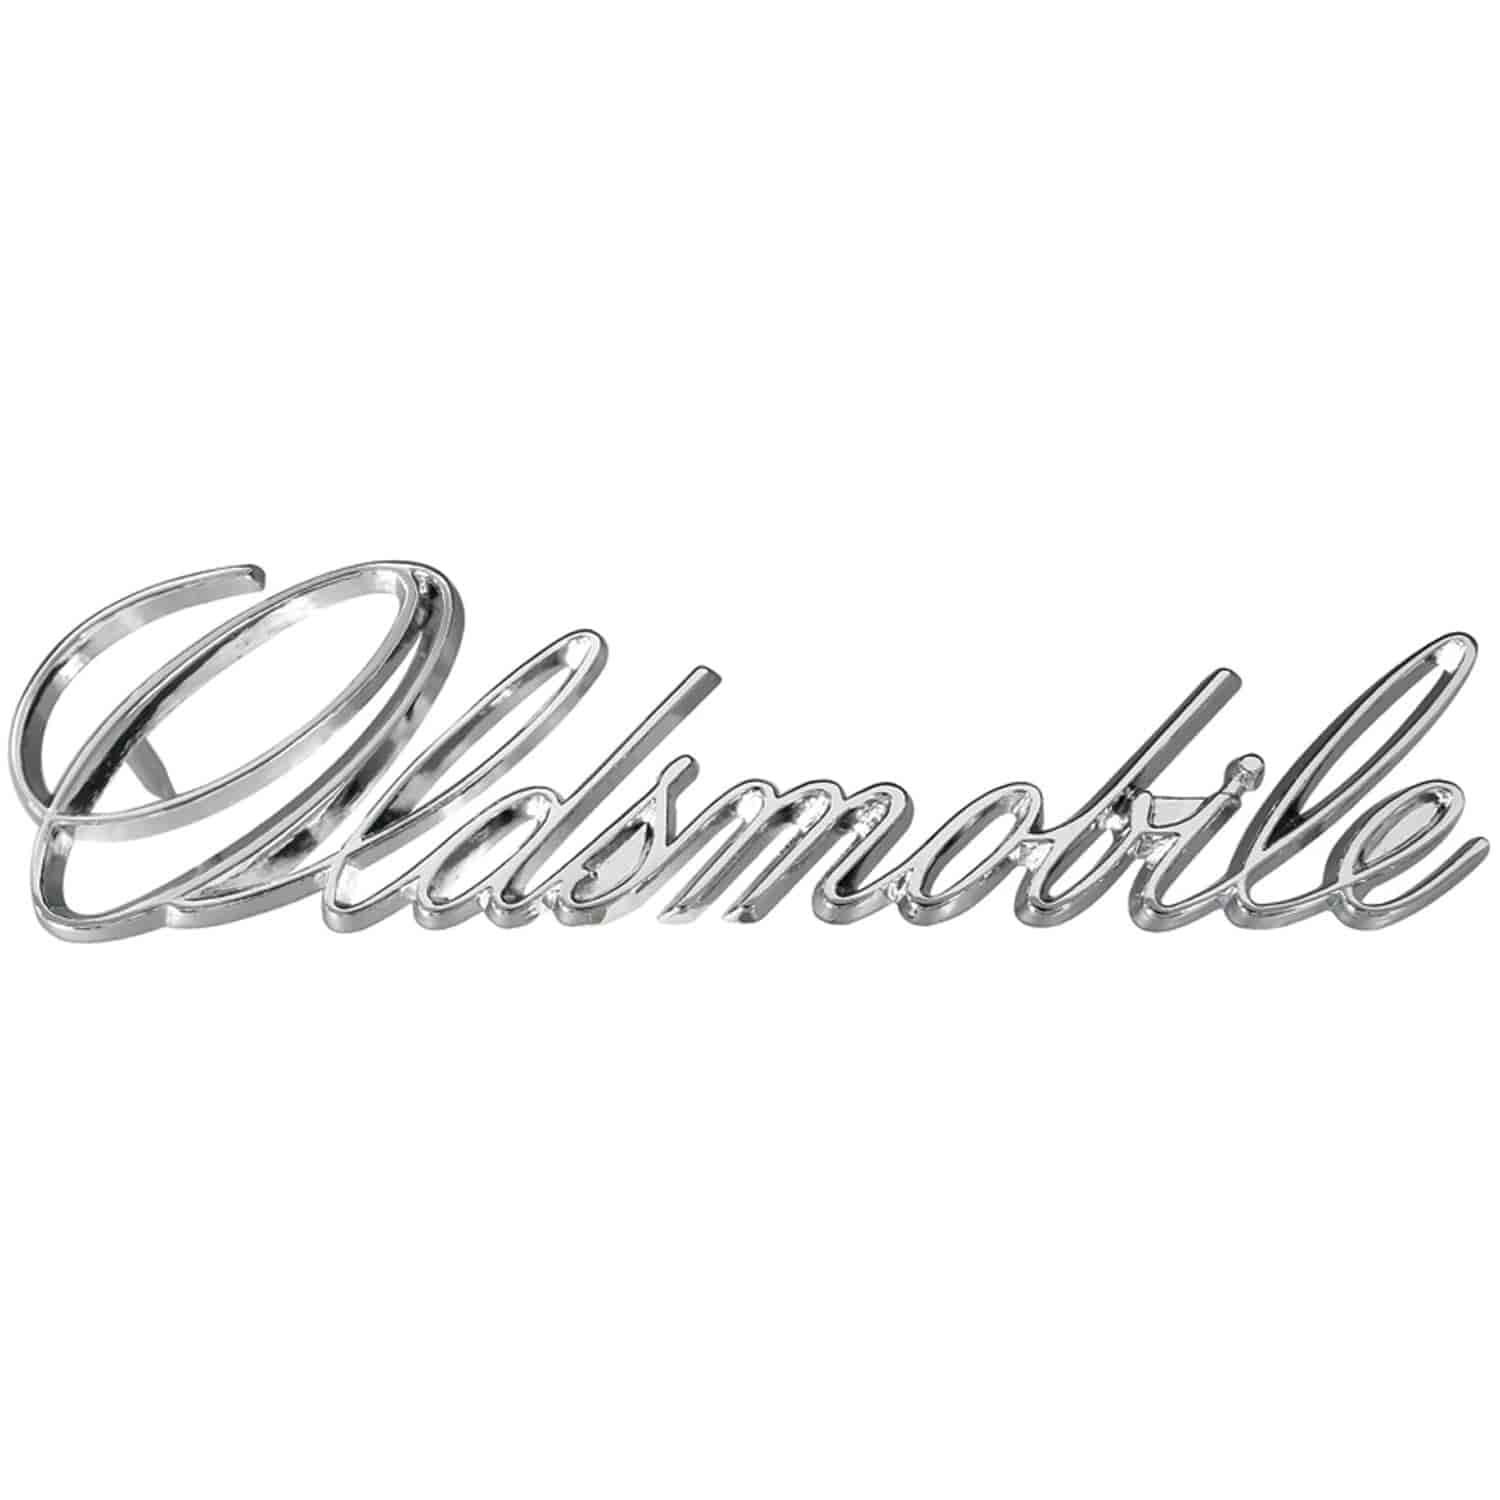 Hood Emblem for 1971-1972 Oldsmobile Cutlass [Oldsmobile Script]